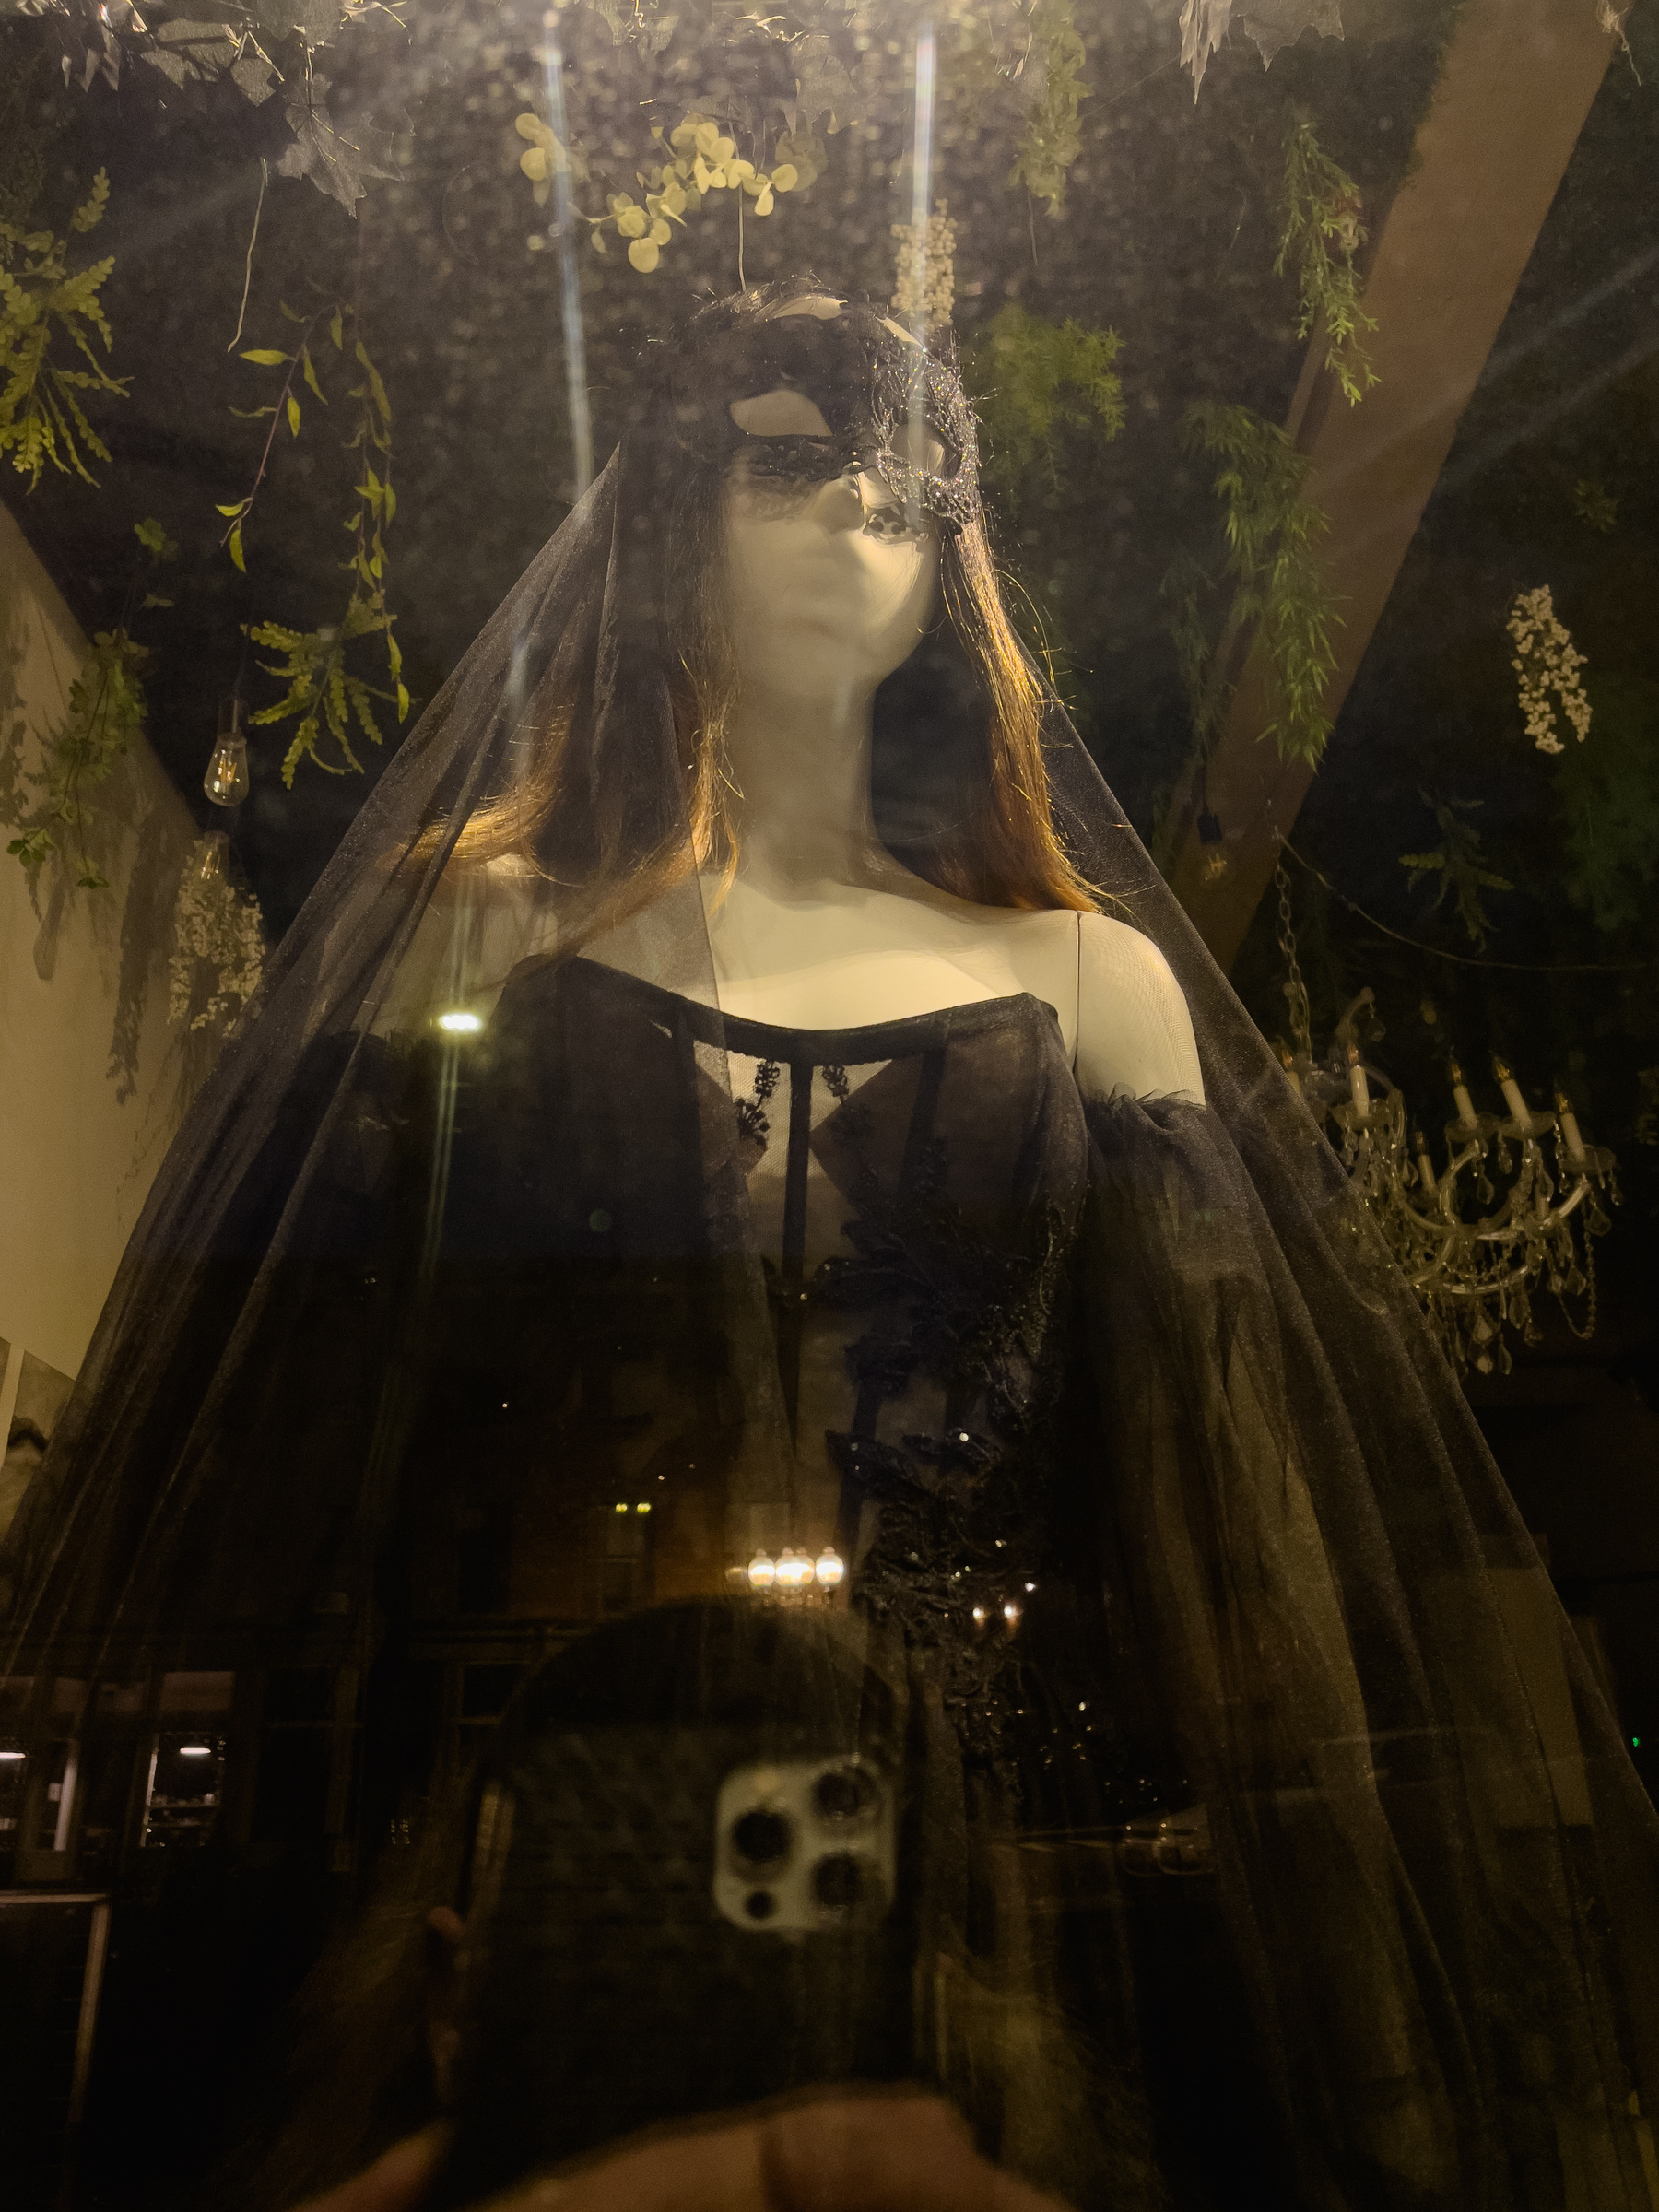 Black wedding dress in window of bridal boutique.